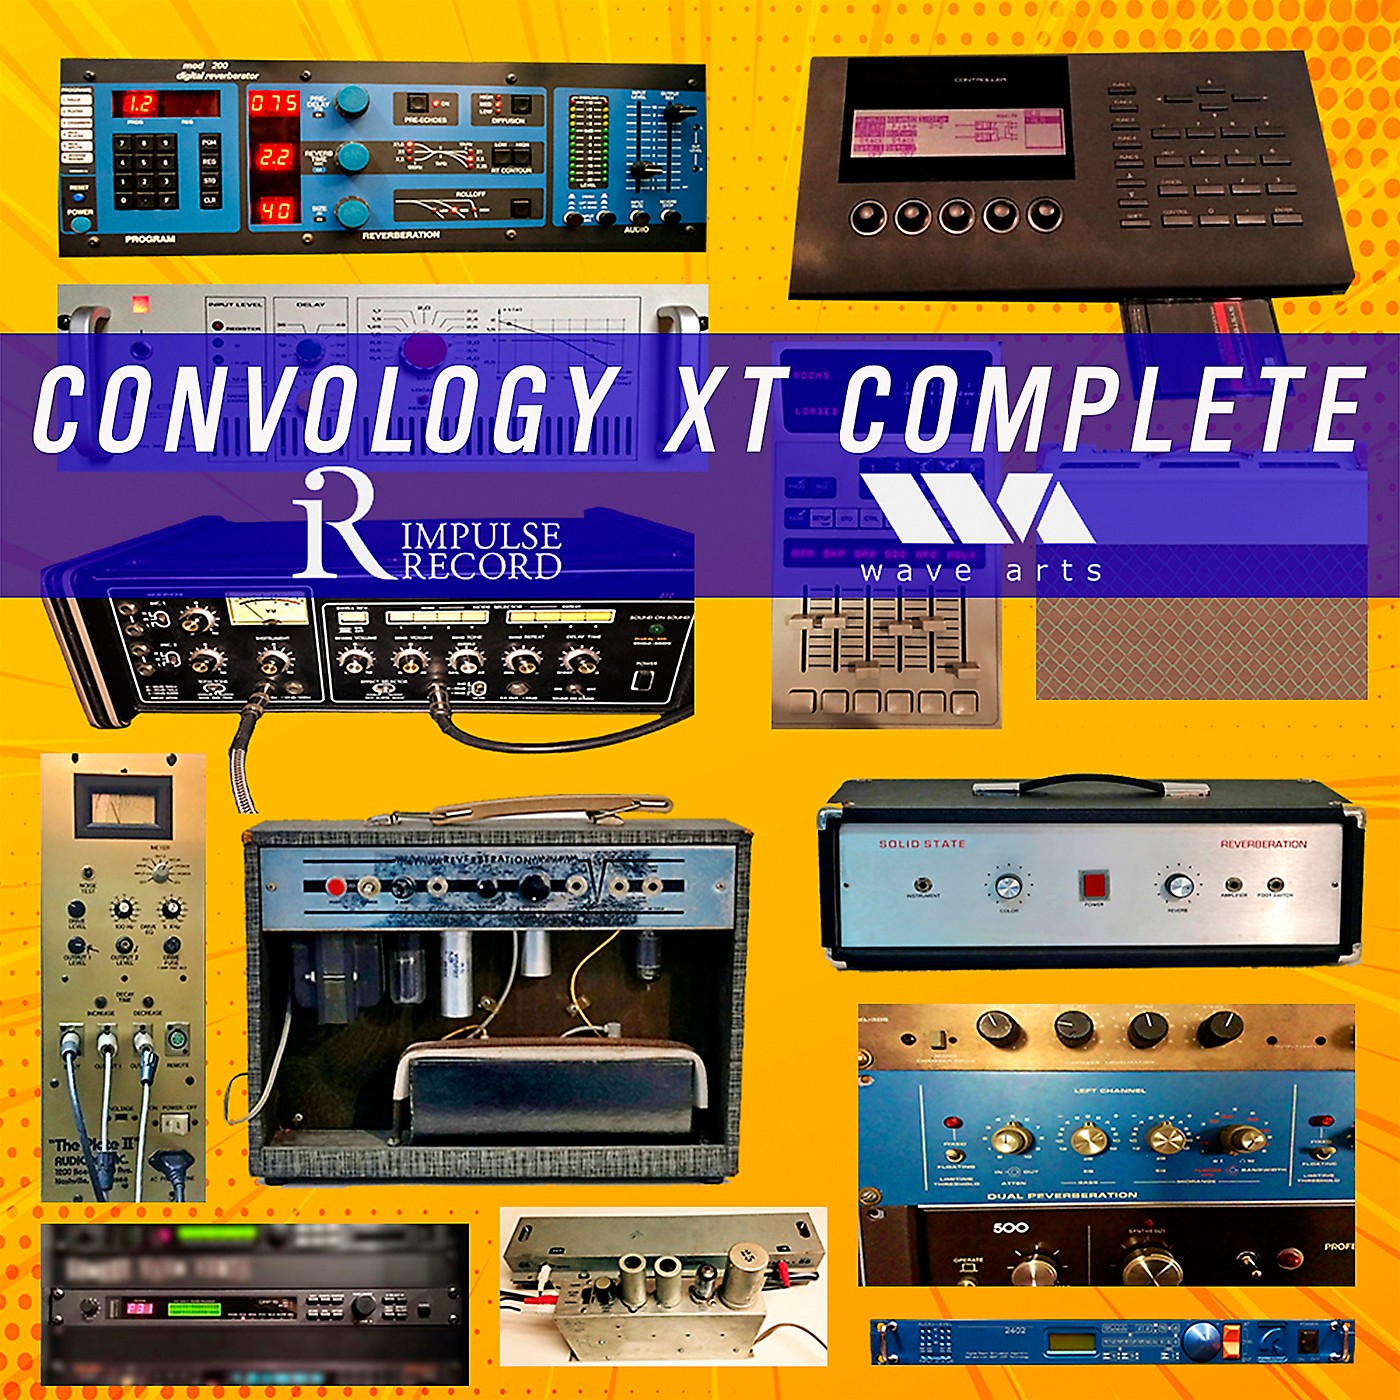 Impulse Record Convology XT Complete thumbnail